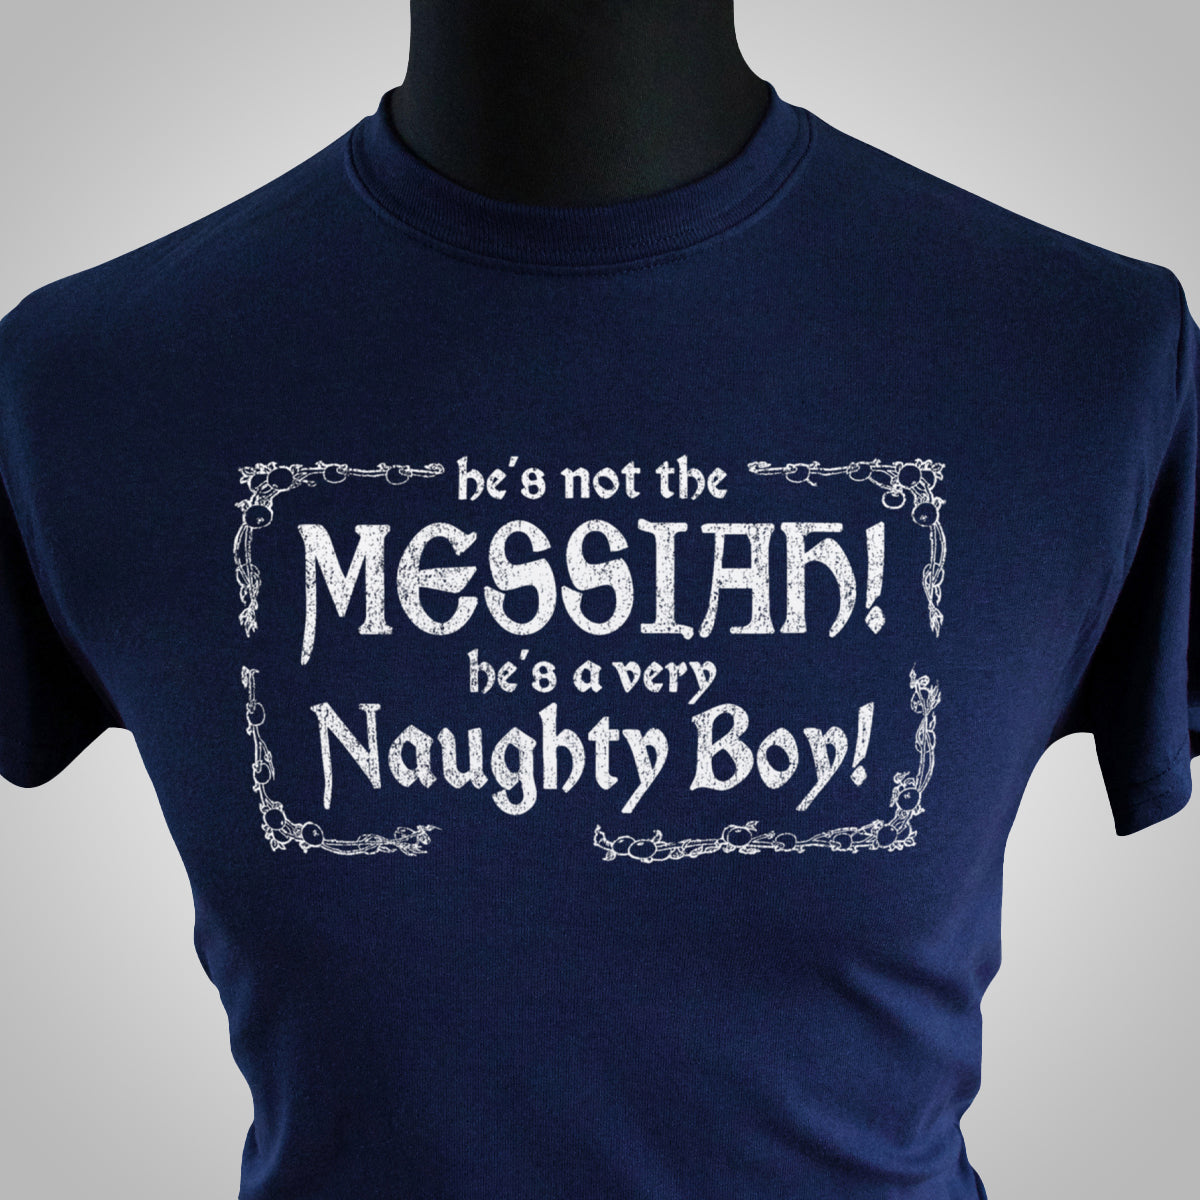 He's Not The Messiah! T Shirt (Colour Options)